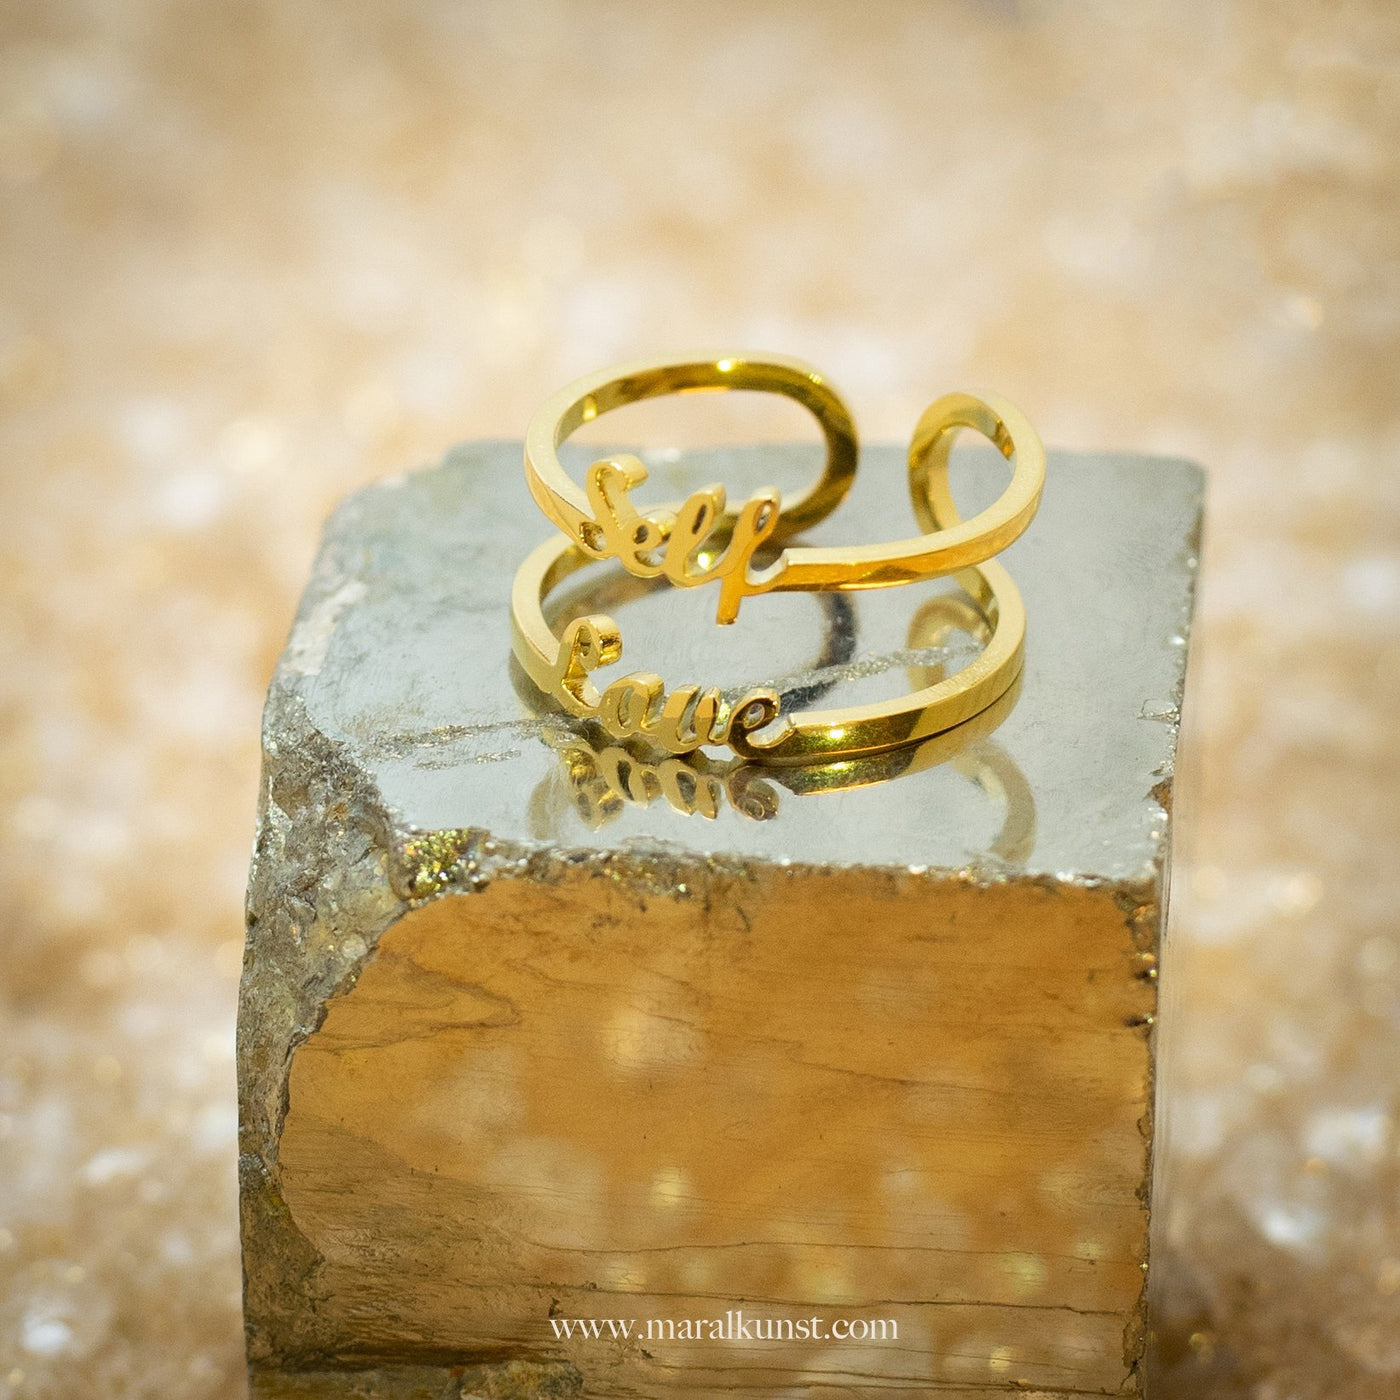 Self Love Ring - Maral Kunst Jewelry